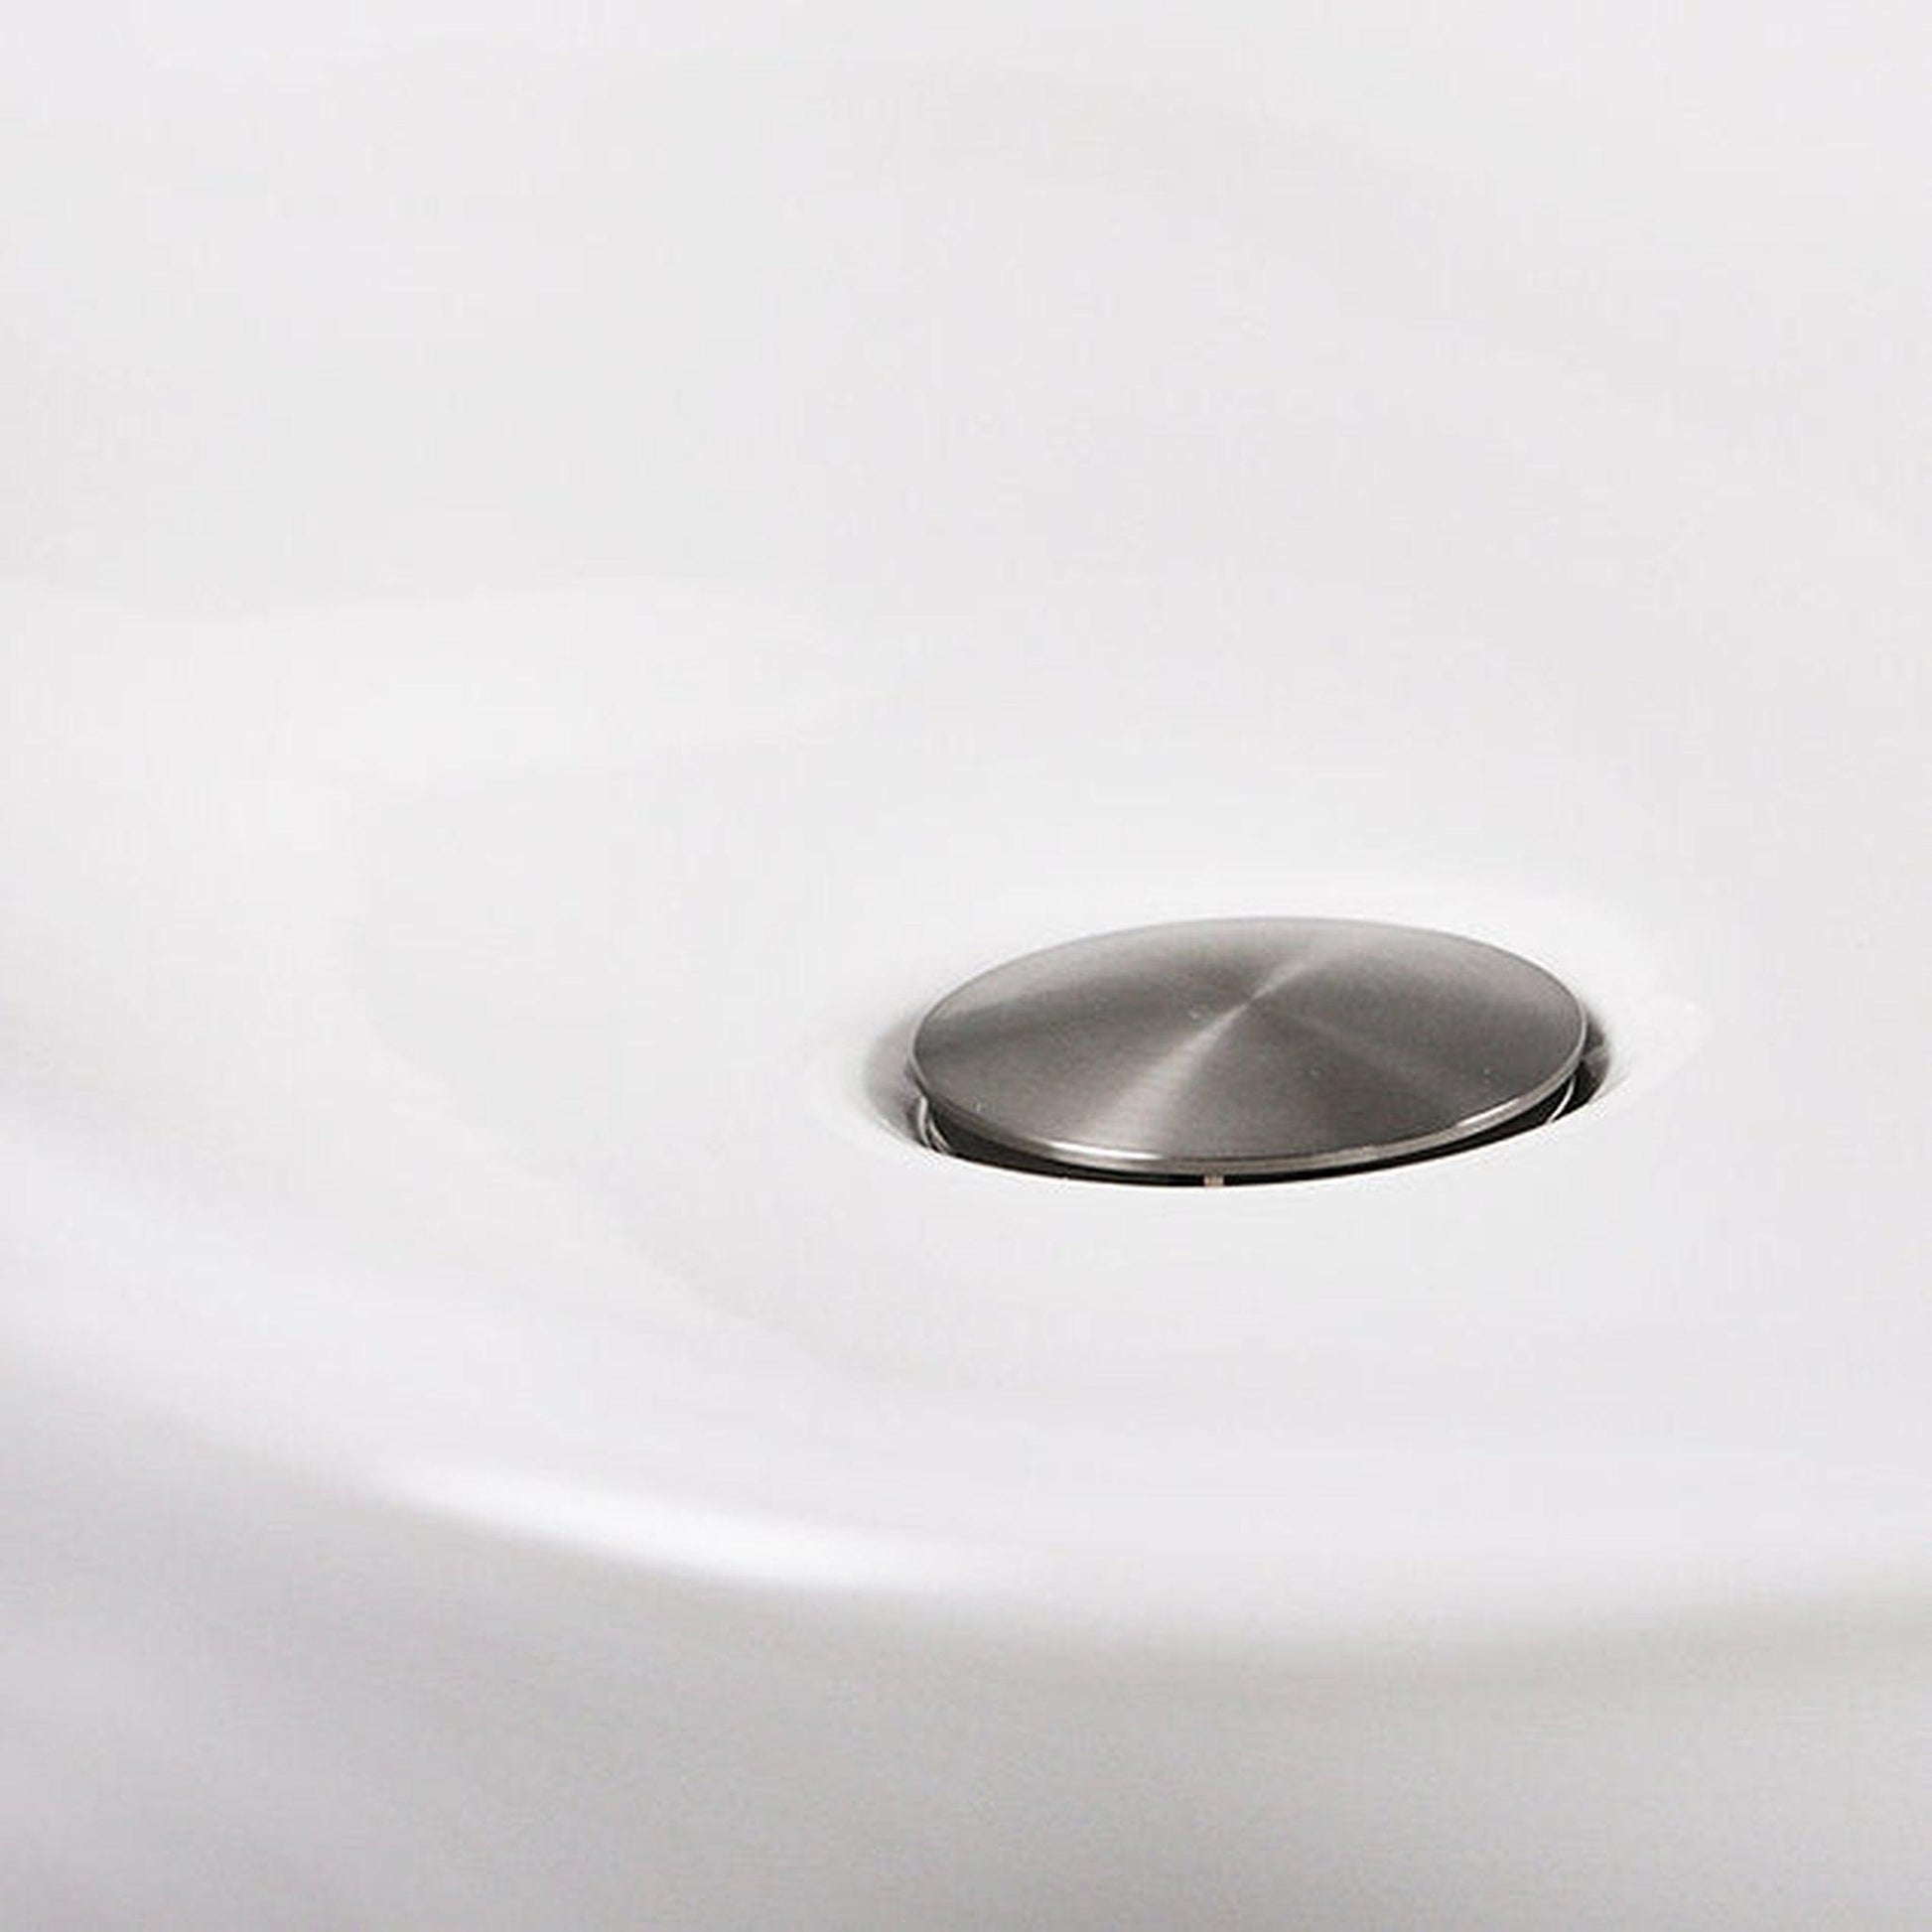 Nantucket Sinks Regatta 25 W" x 15" D Portofino Italian Fireclay Oval Glazed White Vessel Vanity Sink